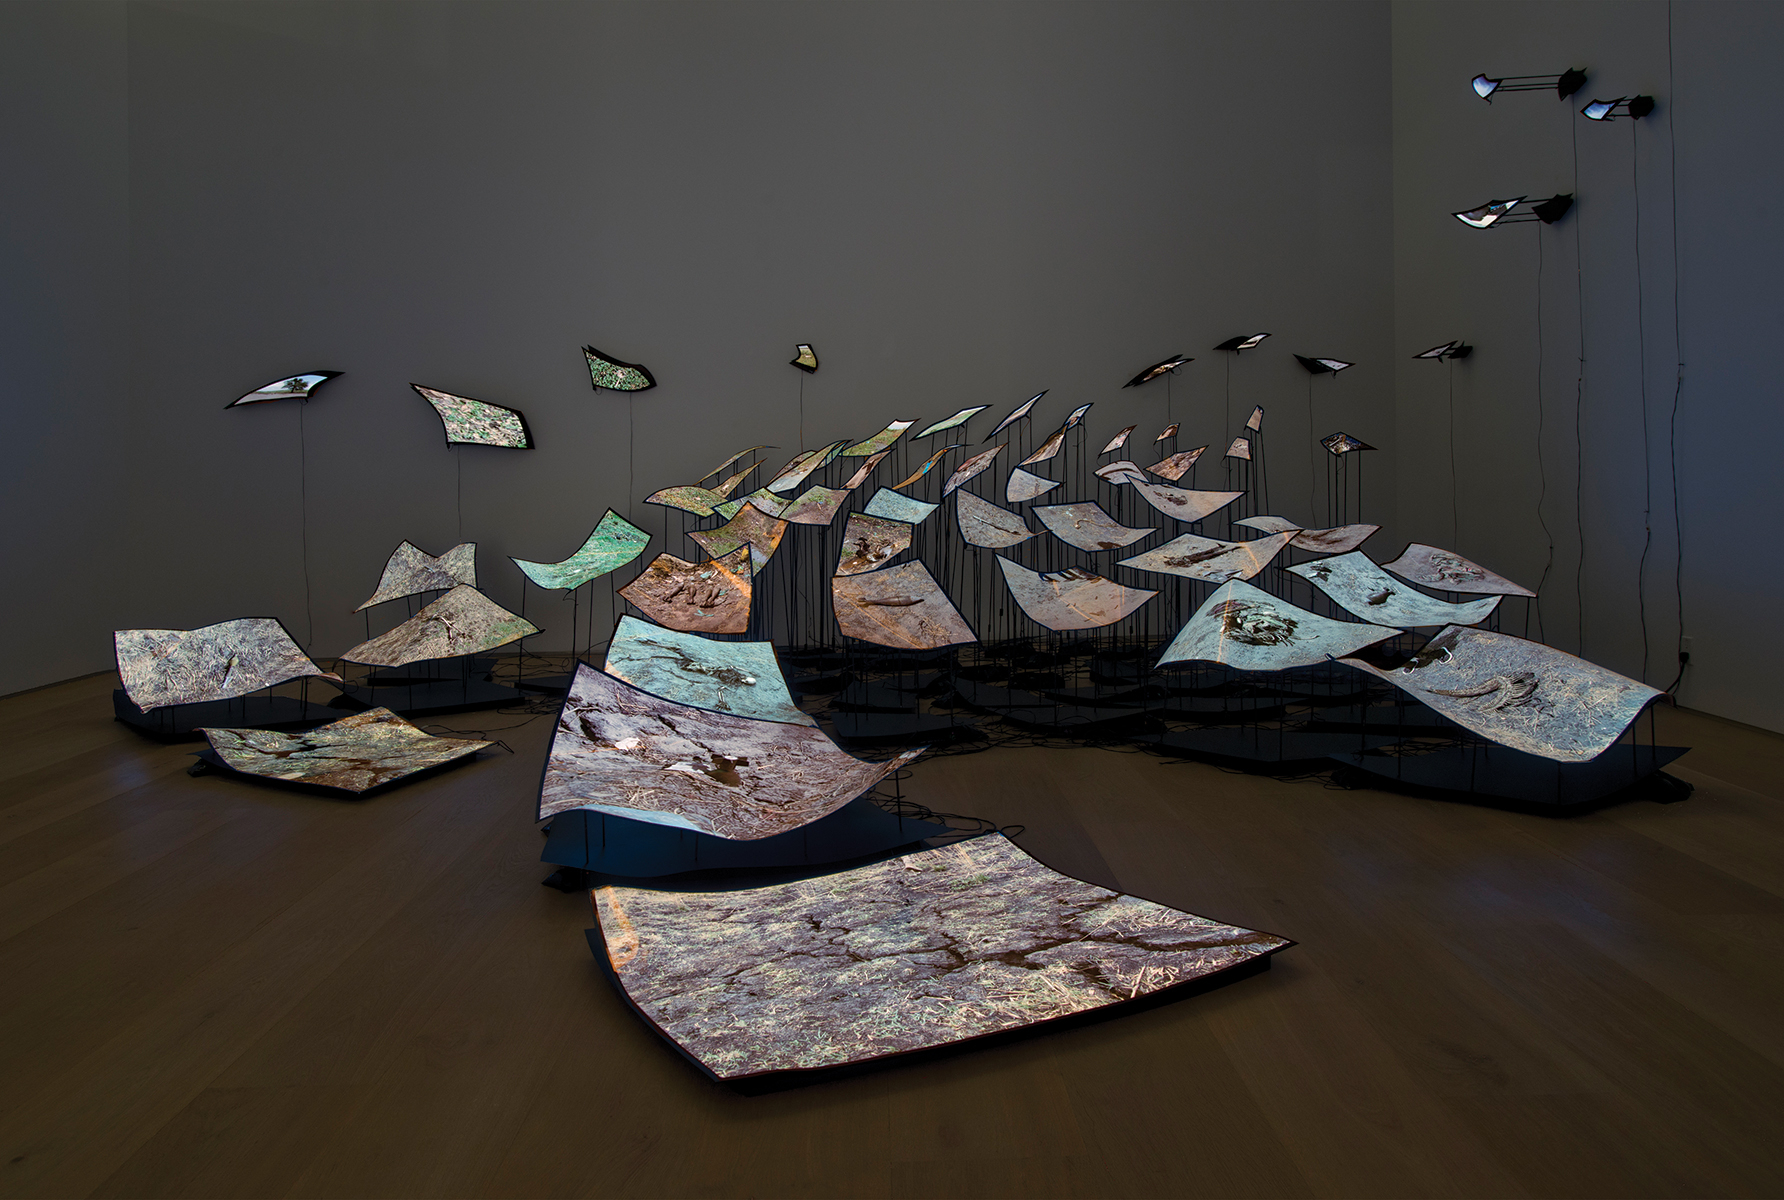     Nichola Feldman-Kiss, Installation view, Esker Foundation., 2014. 

